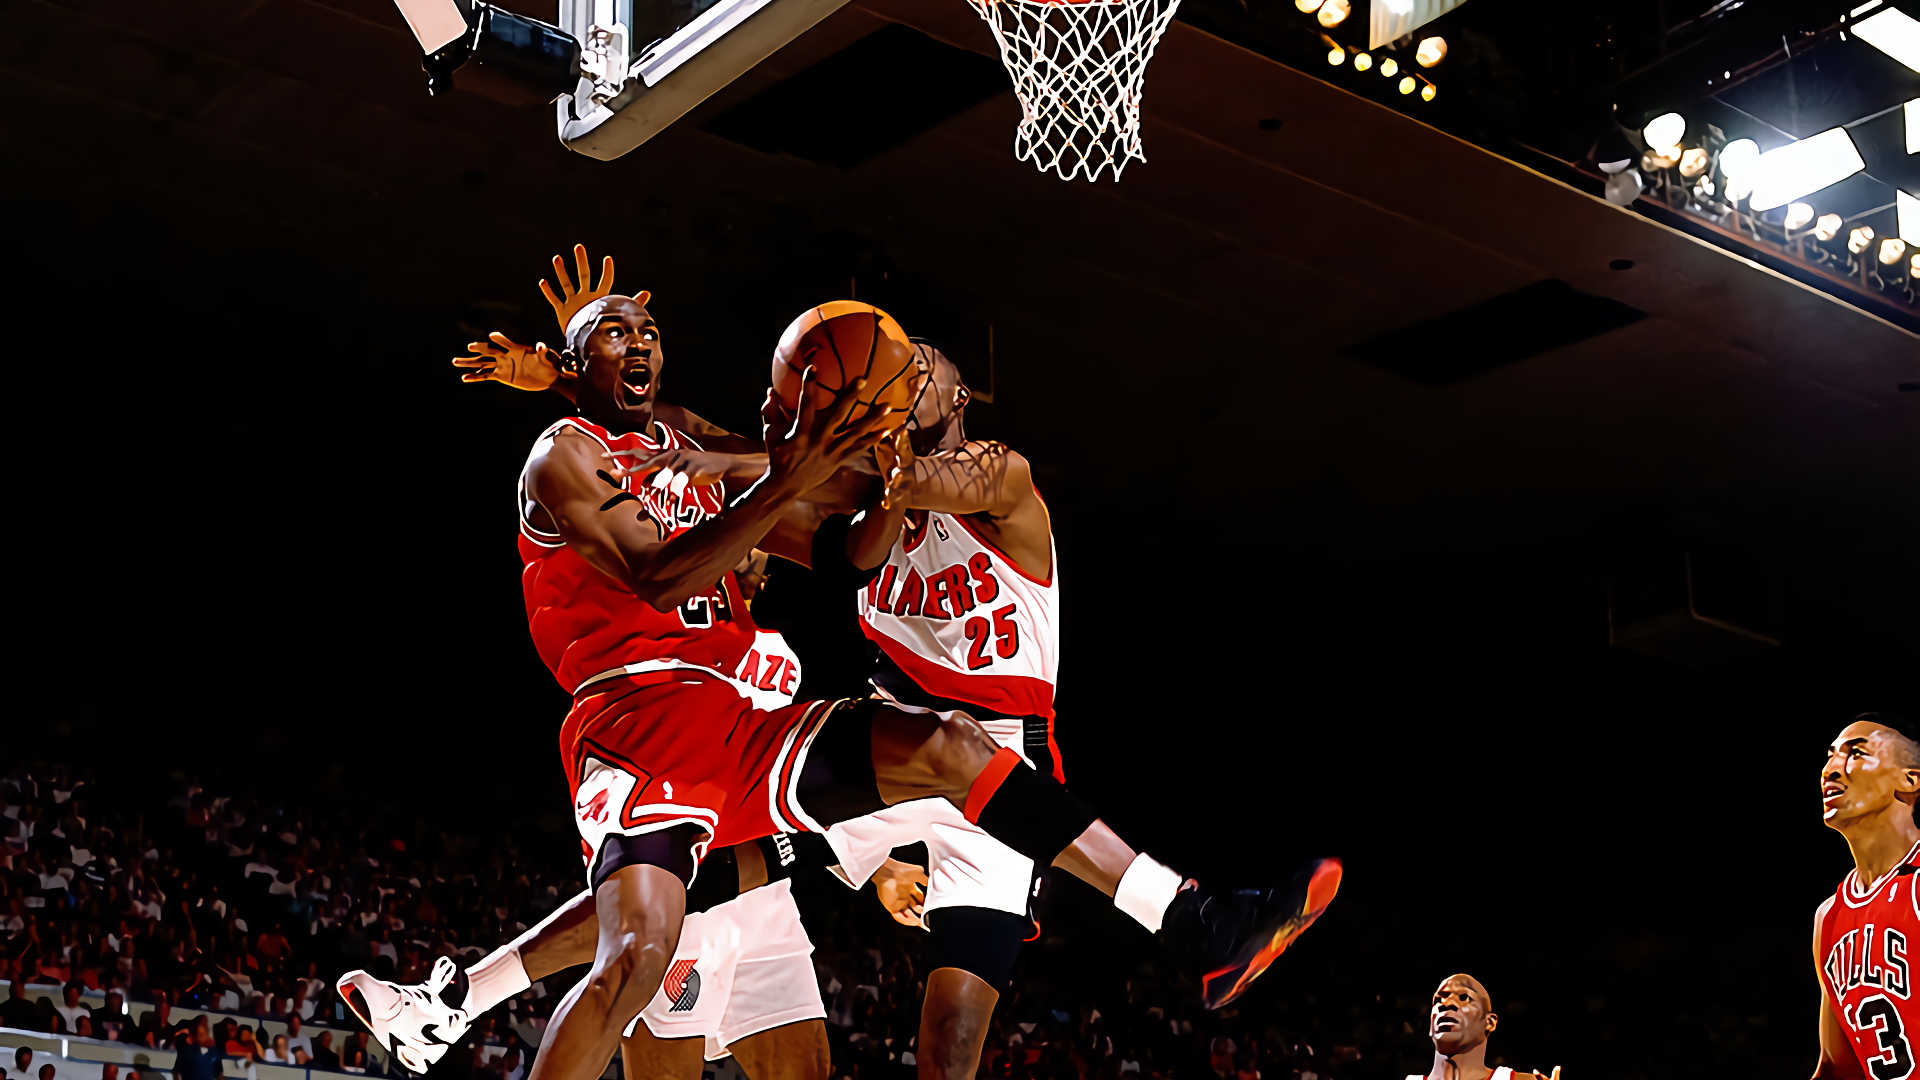 Bulls Vs Blazers and the NBA Playoffs